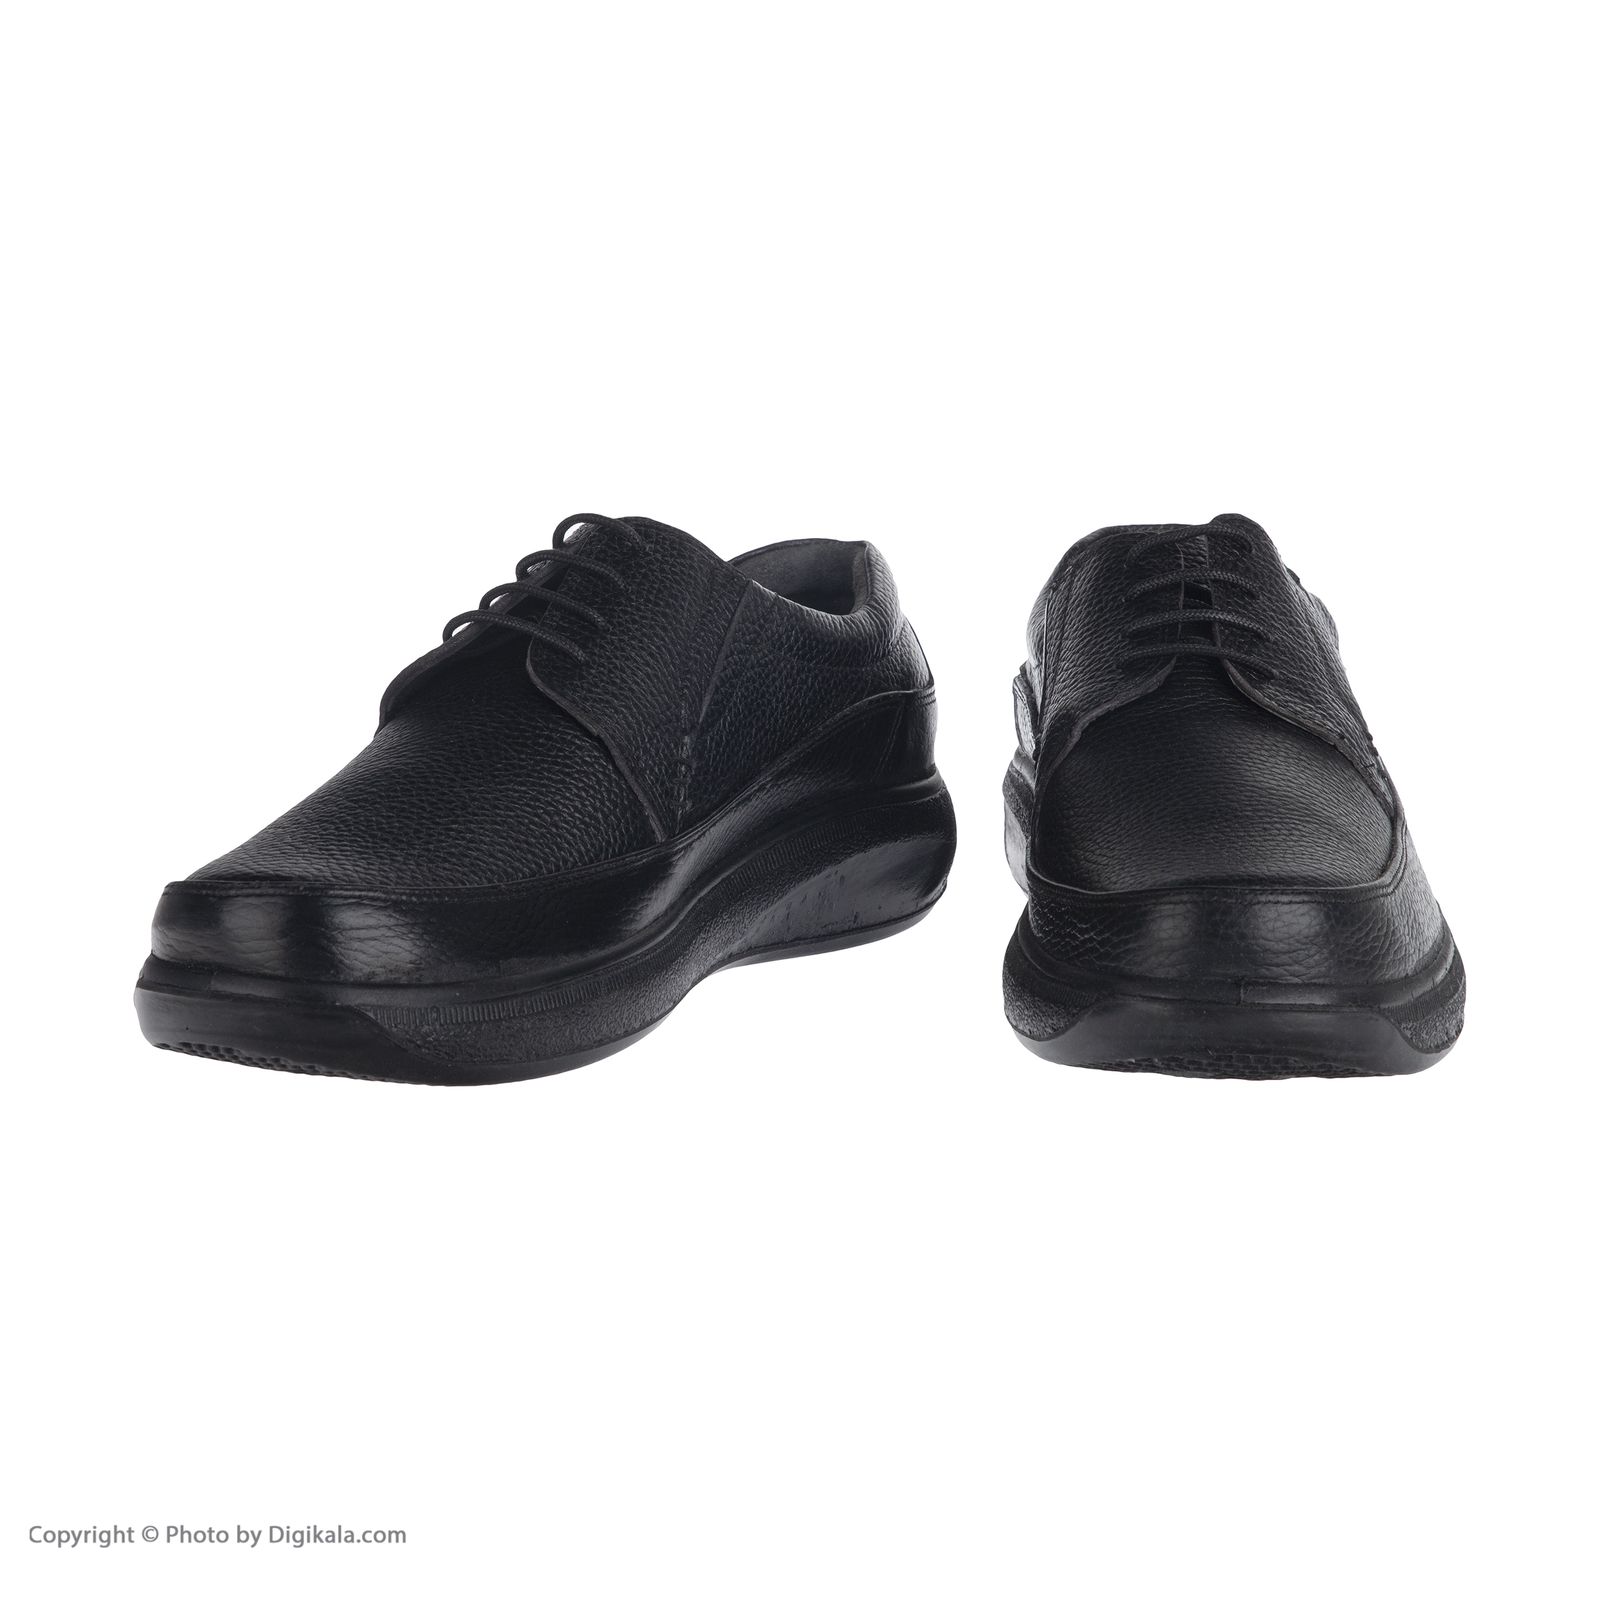  کفش روزمره مردانه واران مدل 7231a503101 -  - 7